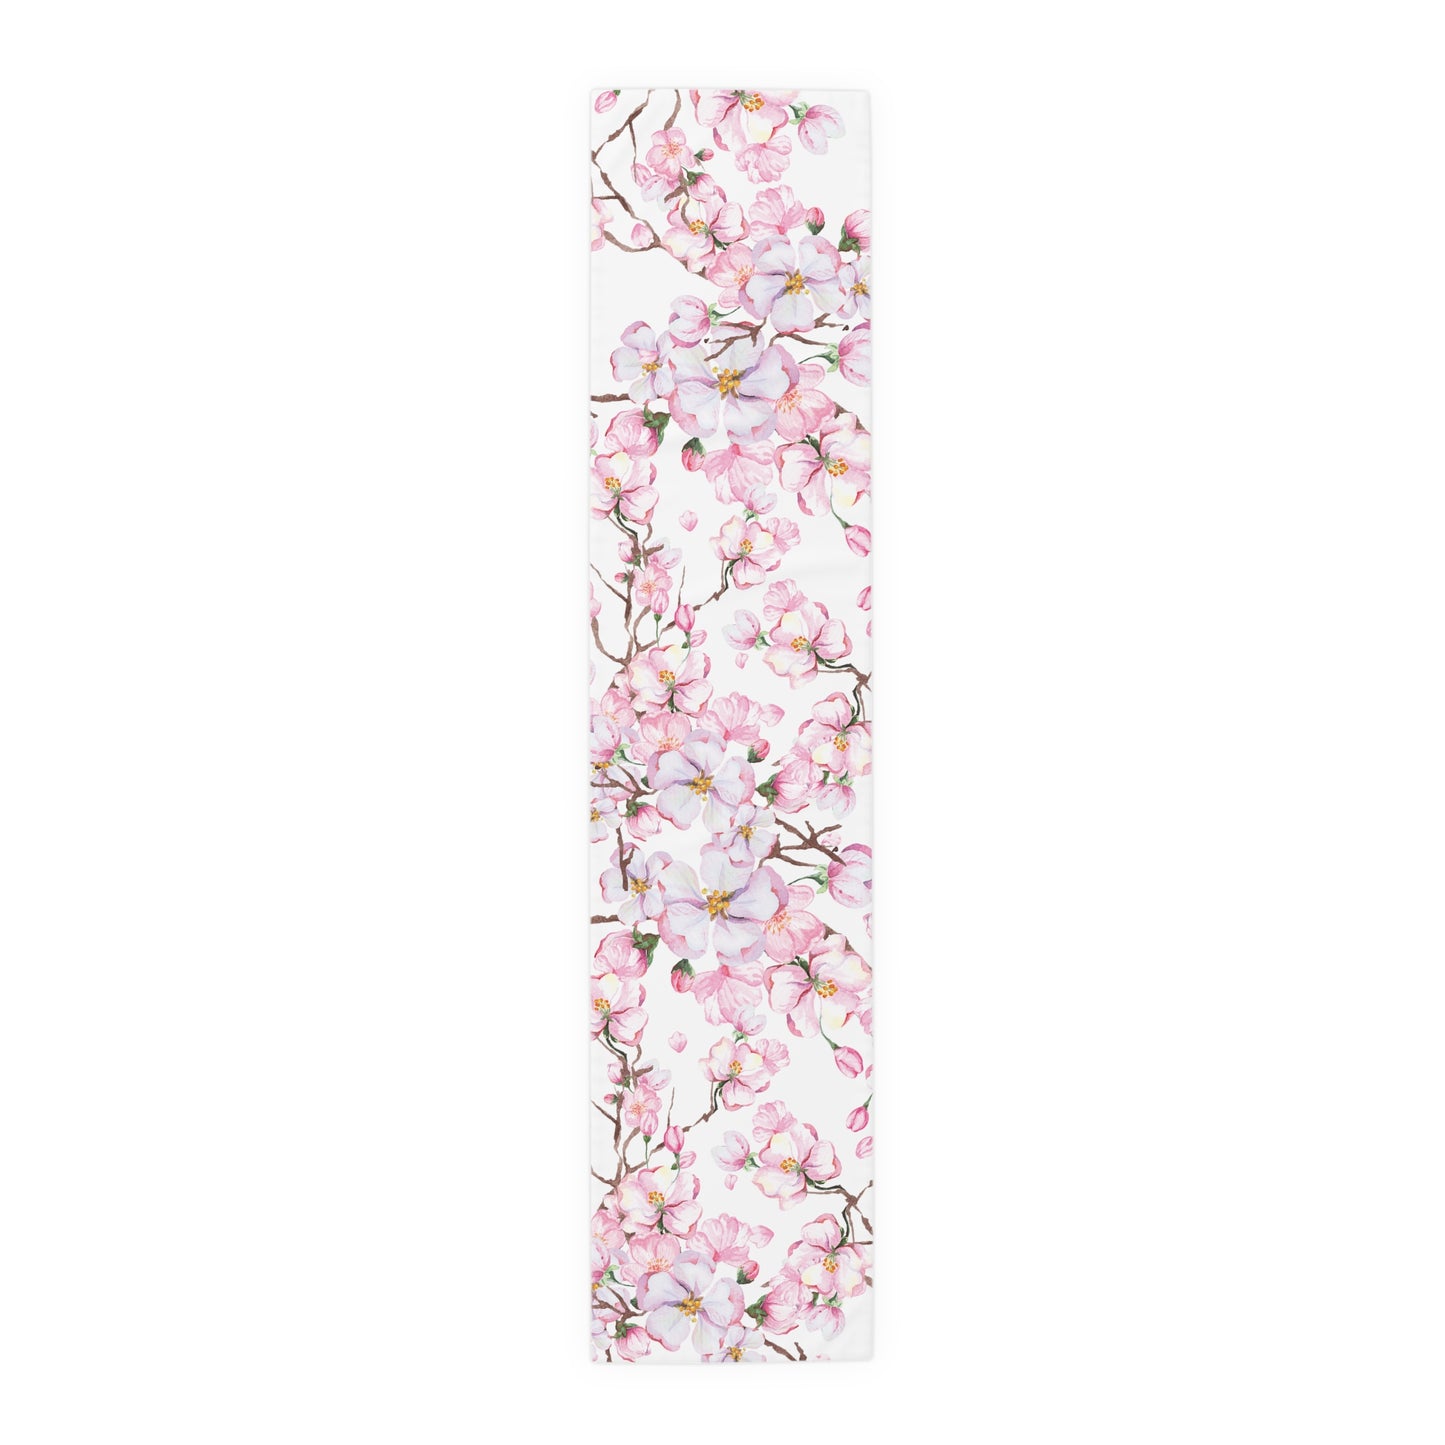 Cherry Blossom Table Runner / Pink Floral Table Runner